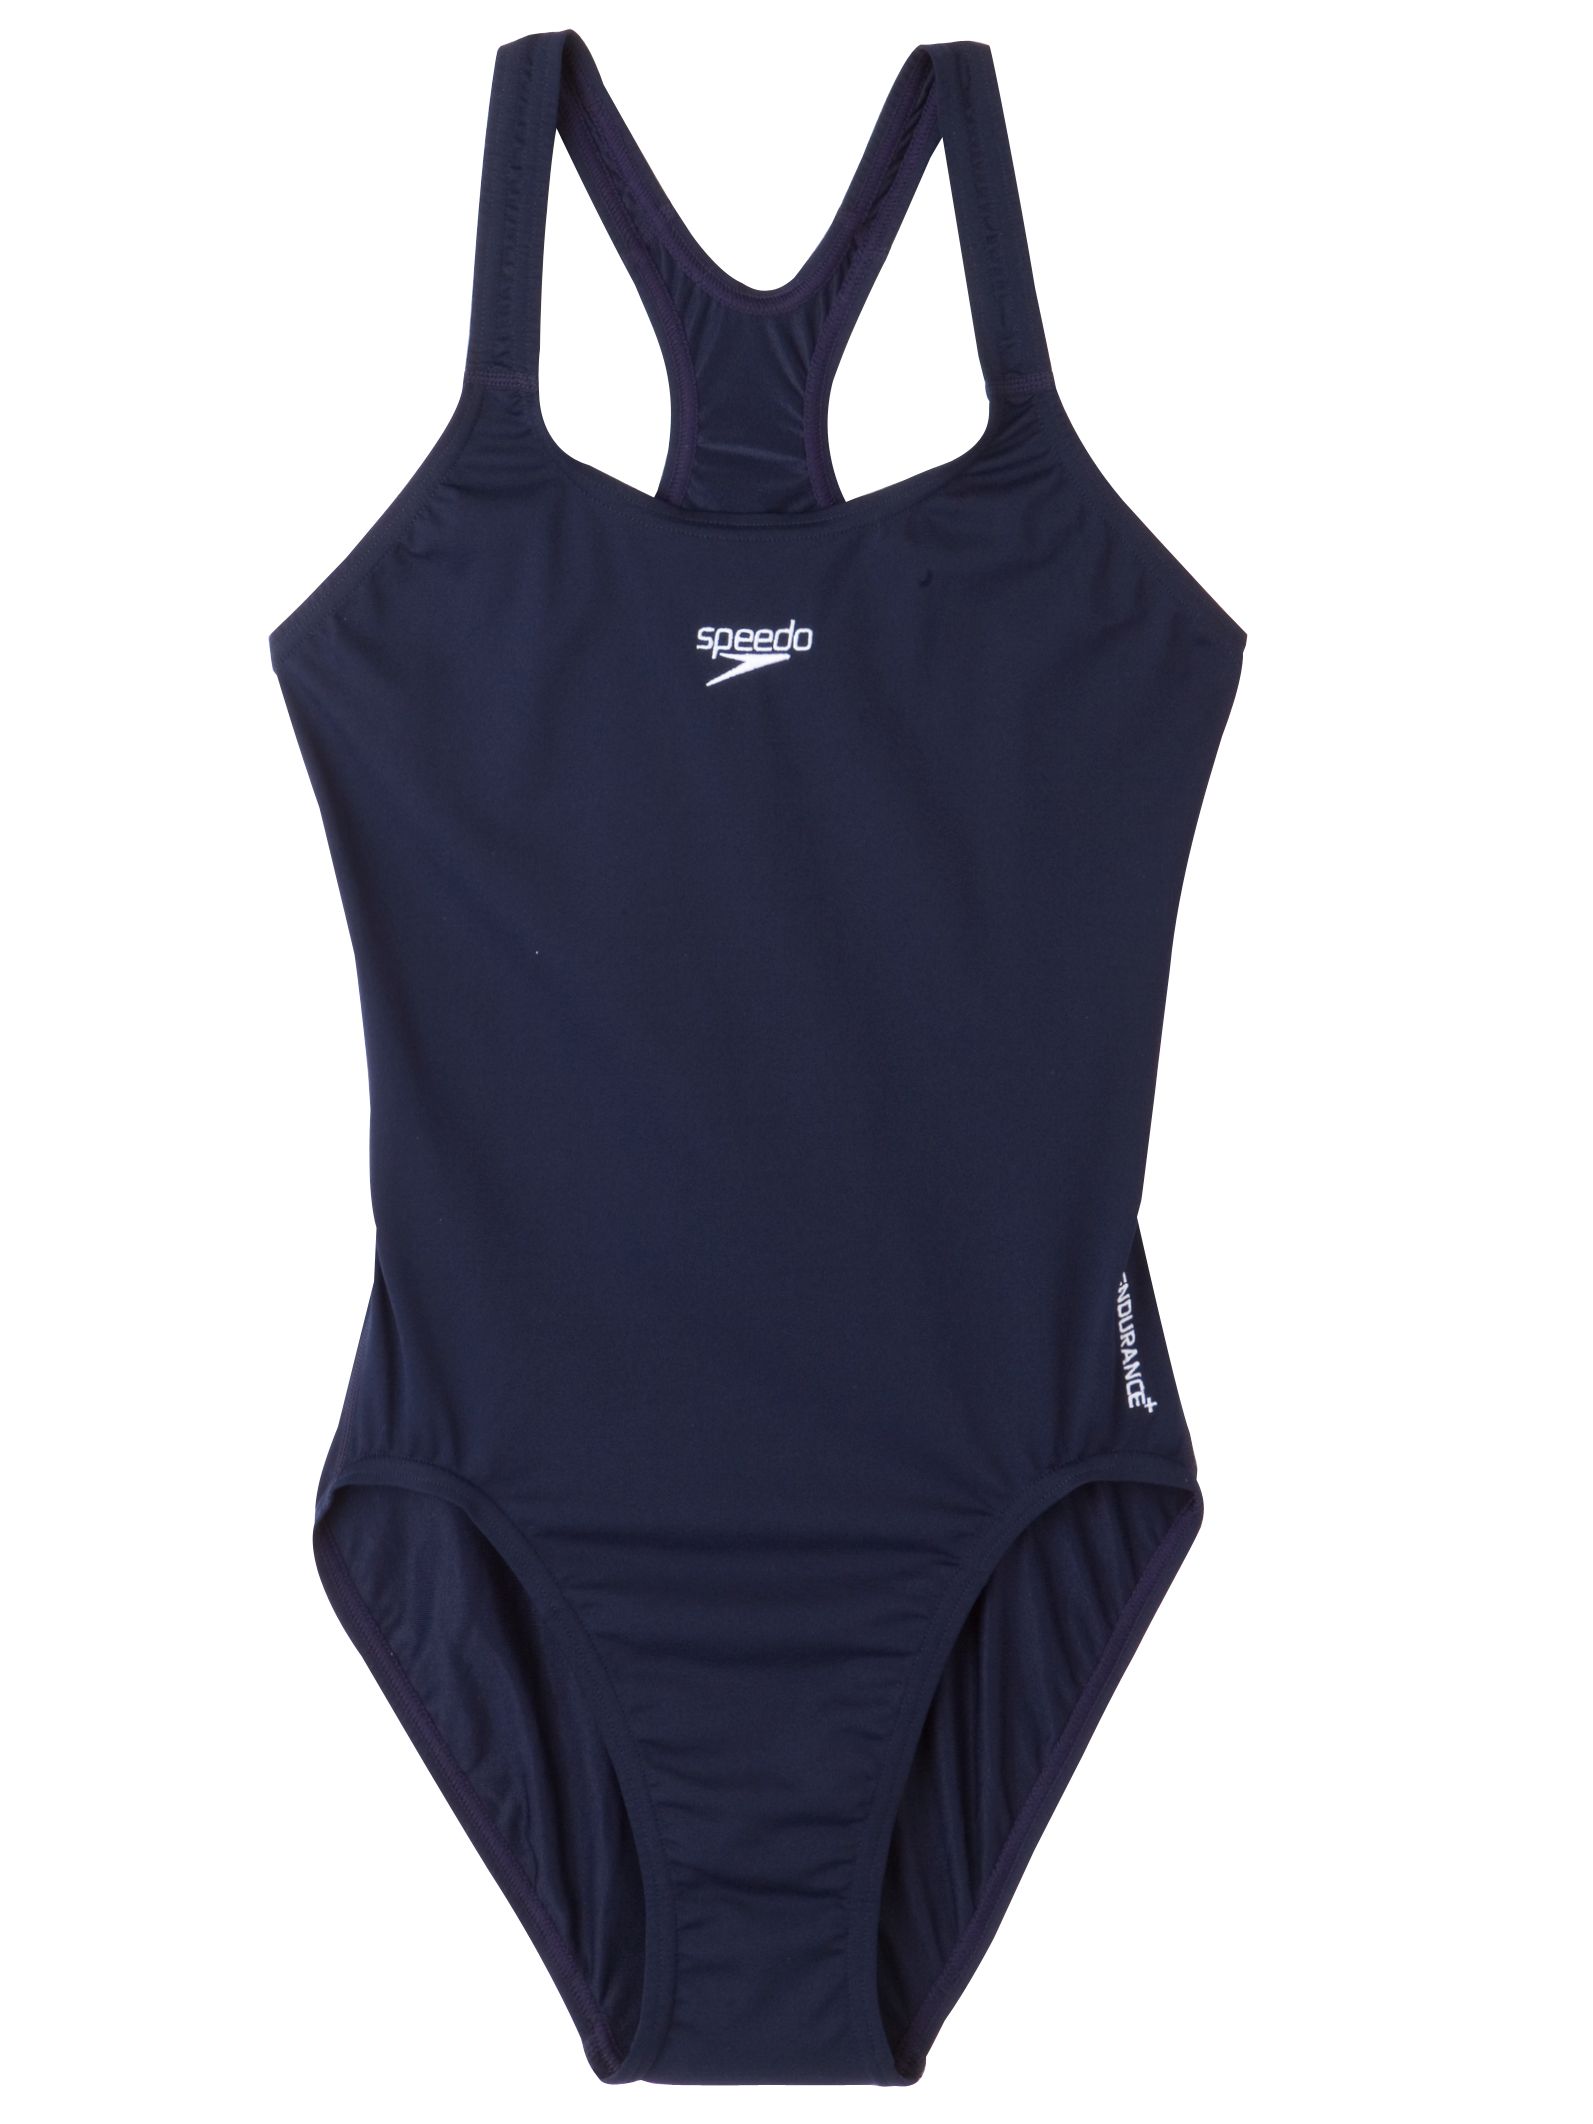 Speedo Endurance  Medalist Swimsuit, Navy, Size 34